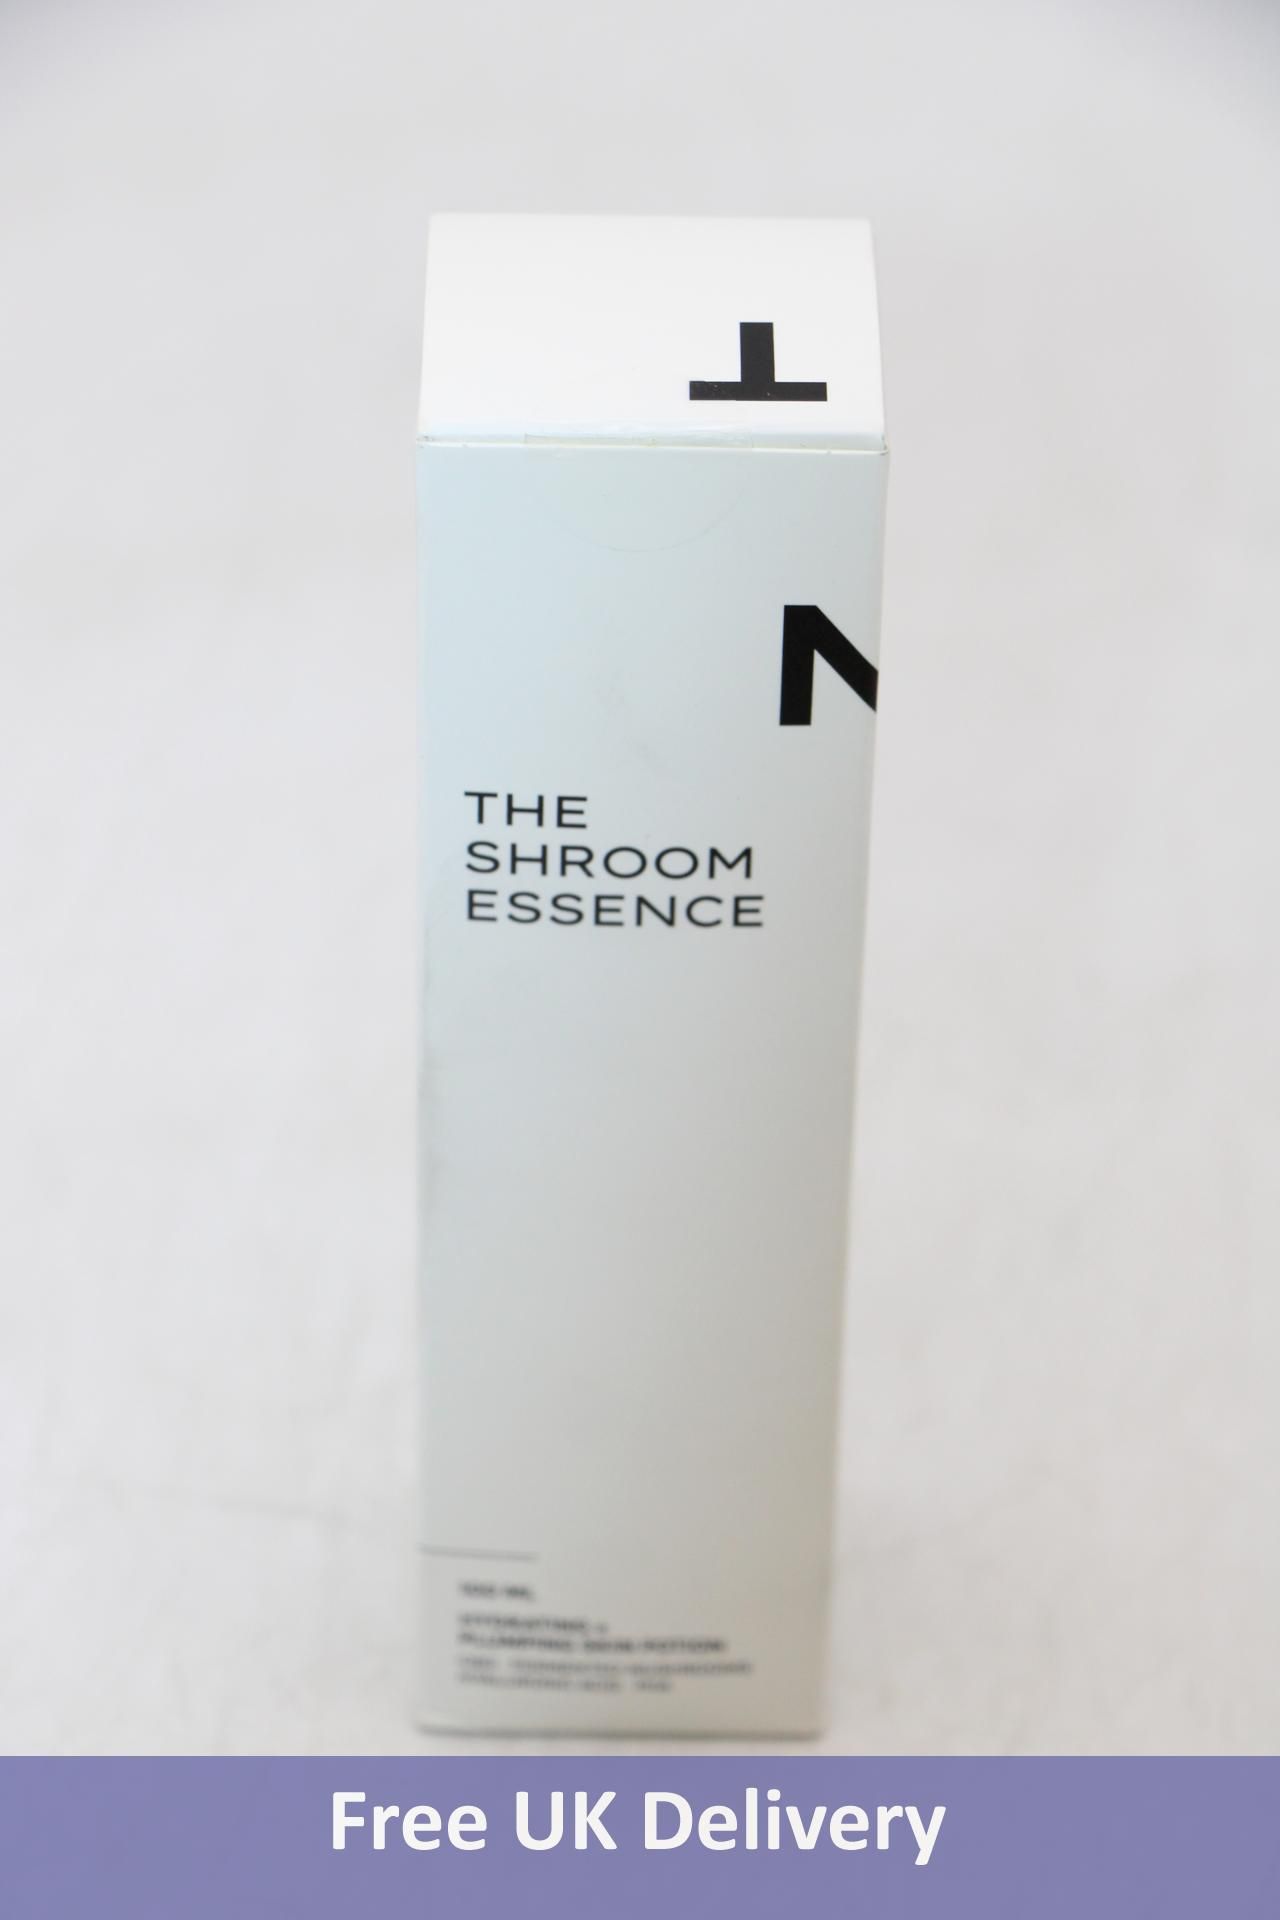 Ten Mantle The Shroom Essence Bottle Hydrating x Plumping Skin Potion Cbd, Size 100ml - Image 3 of 10